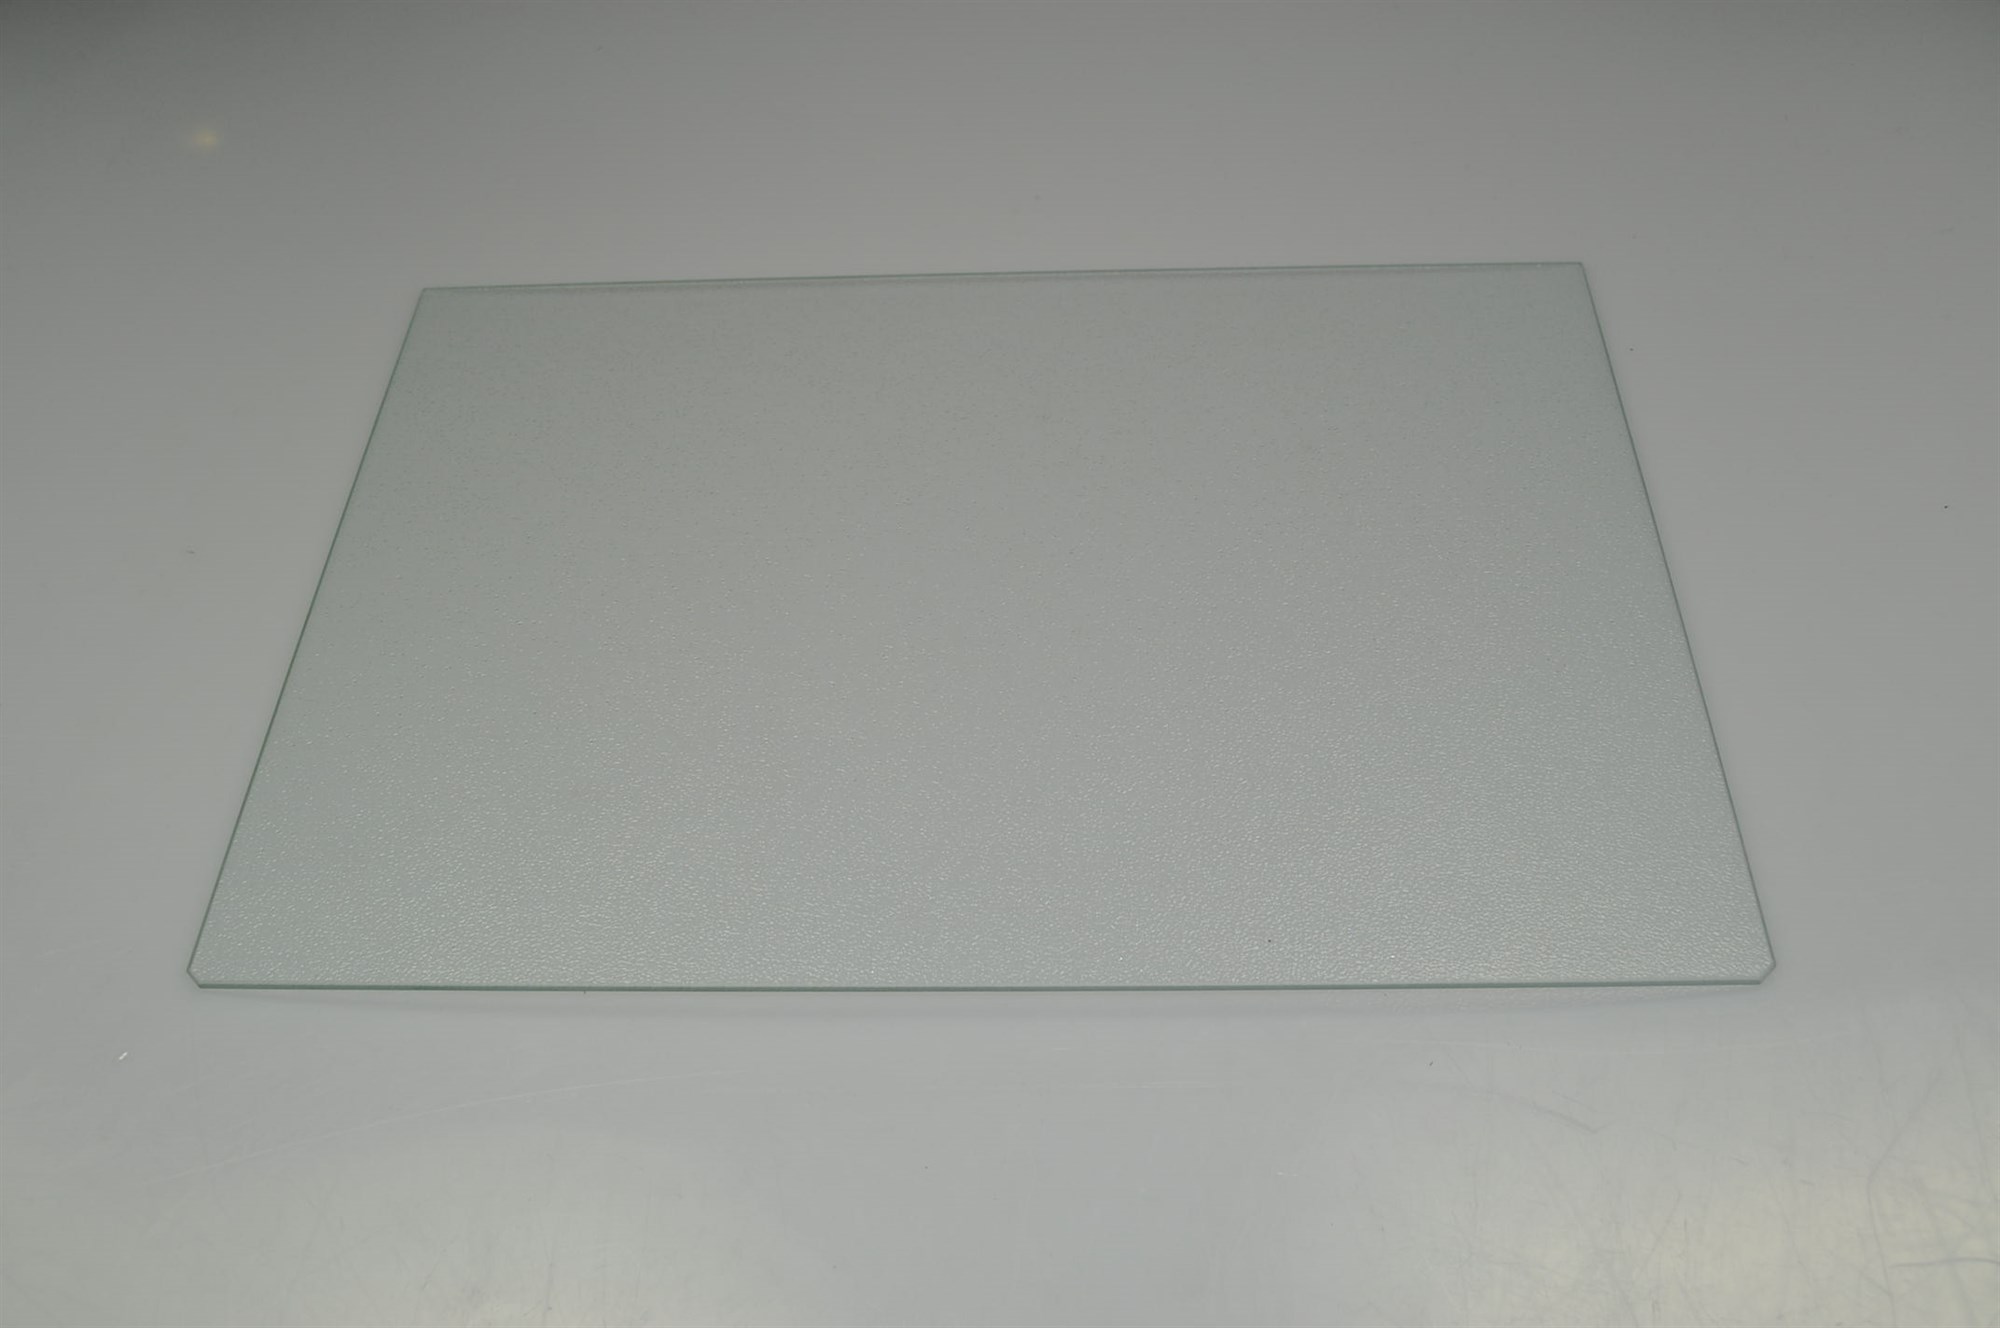 Fridge Shelf Glass Bottom Clear Glass Replacement Disc 43 x 33cm